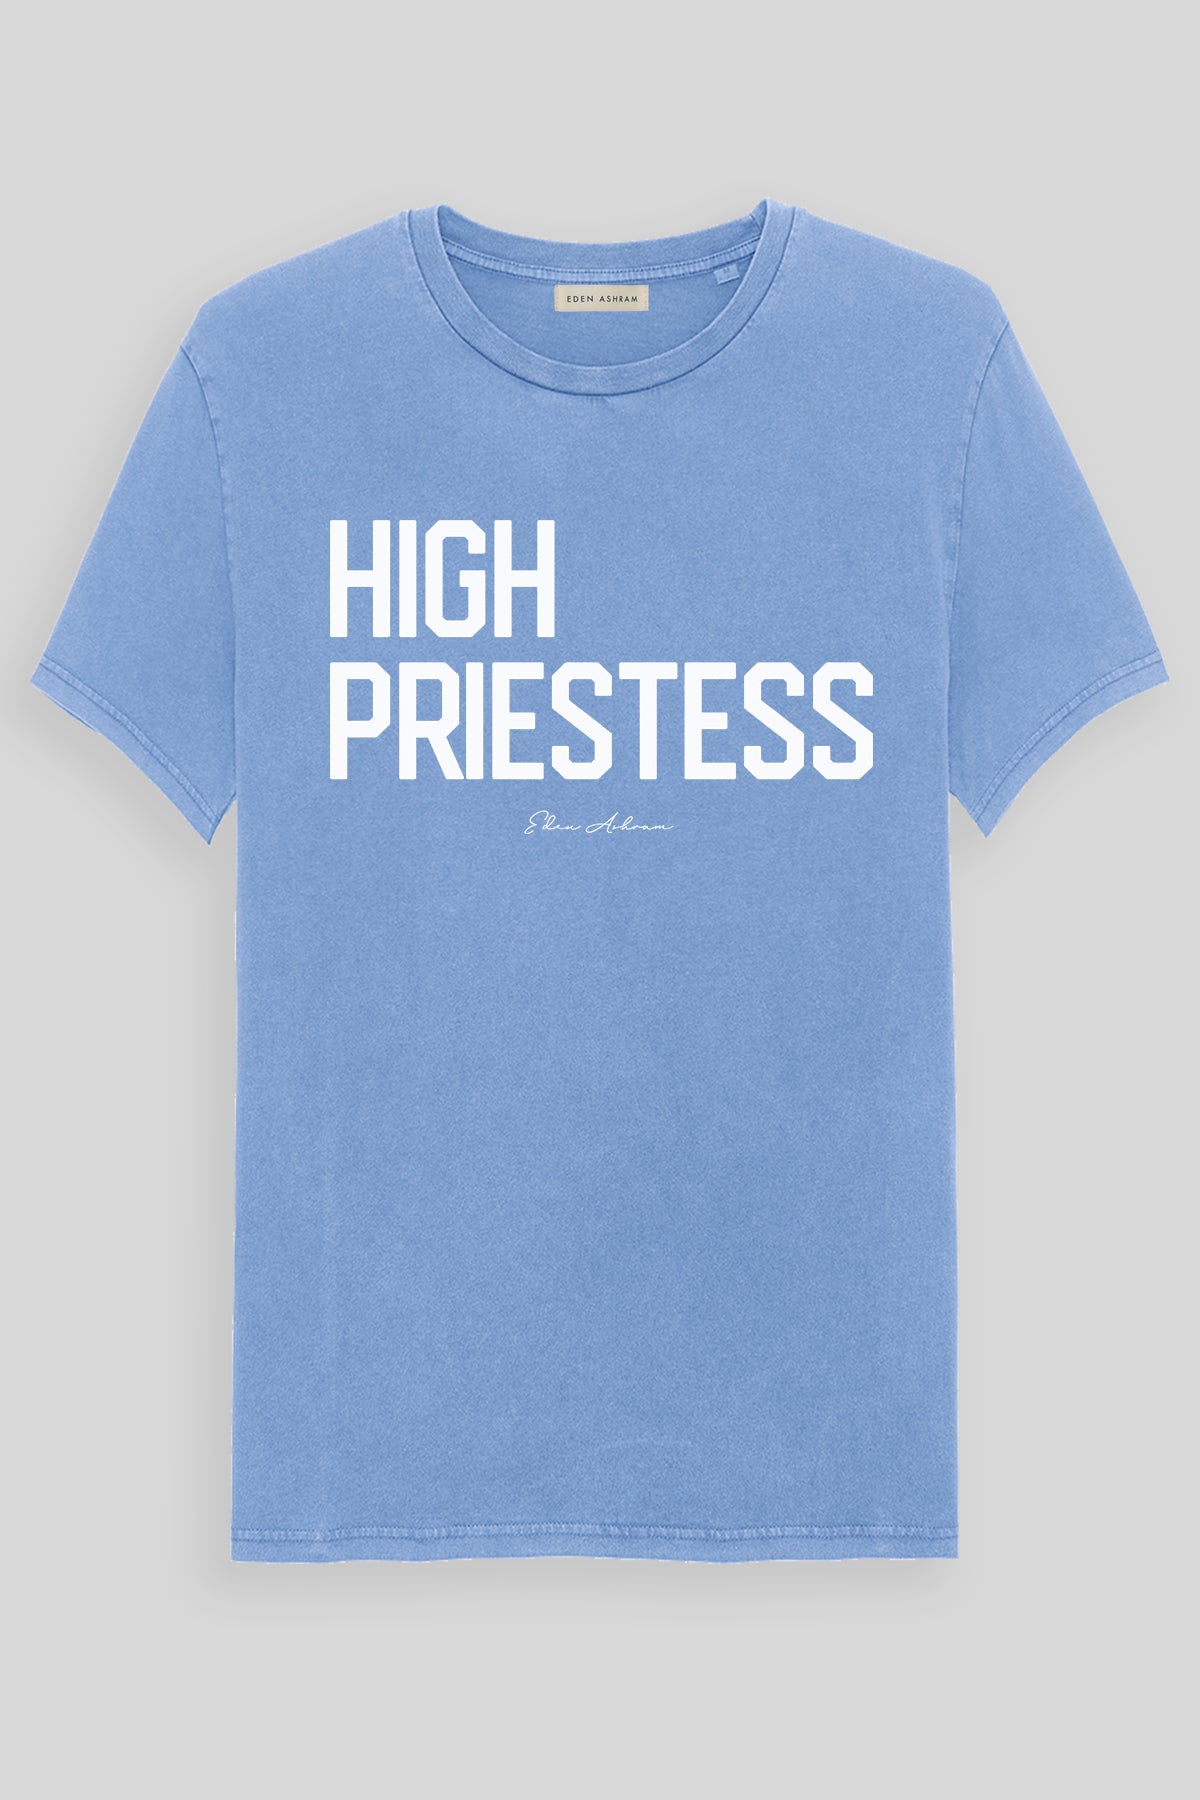 EDEN ASHRAM High Priestess Premium Vintage T-Shirt Vintage Blue